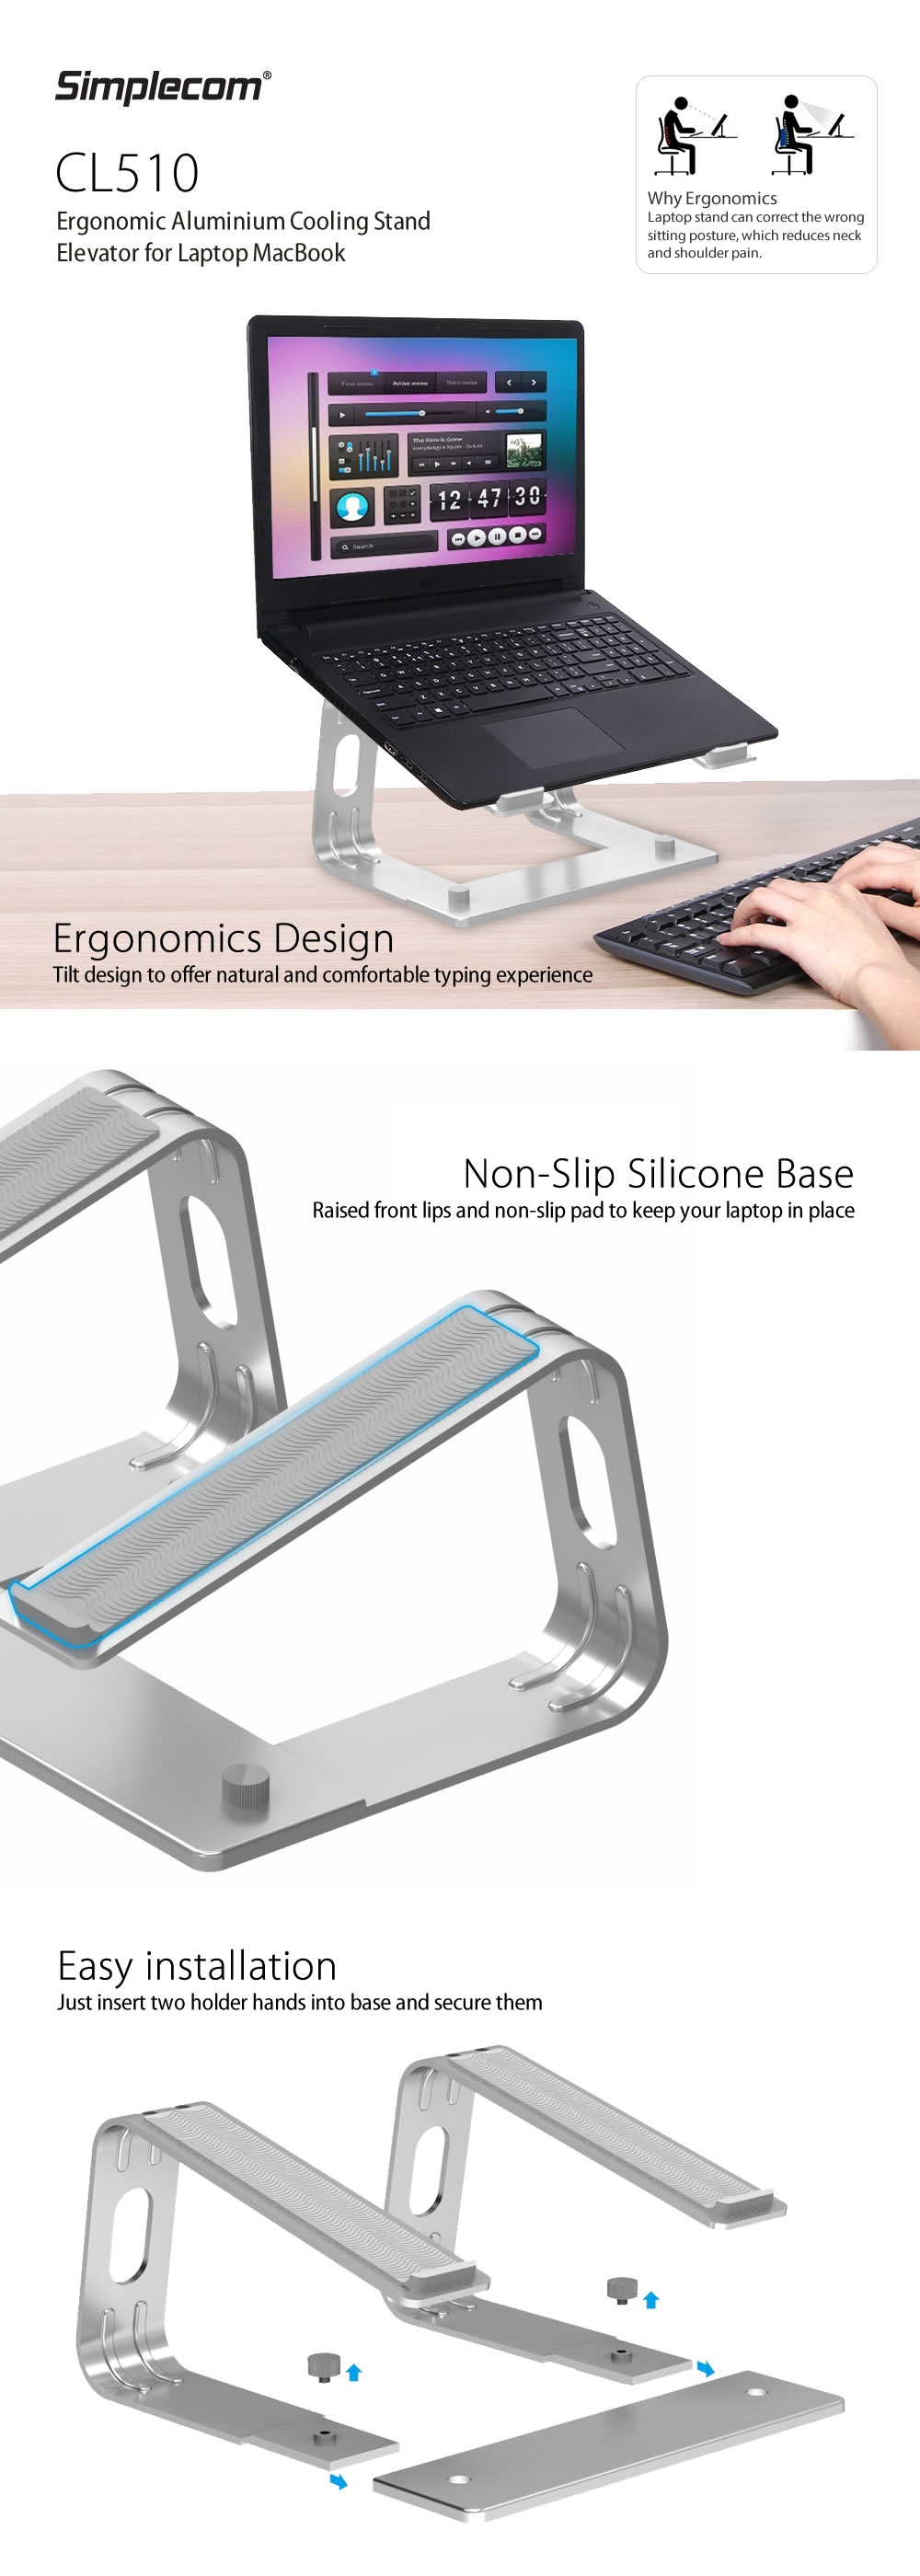 Simplecom CL510 Ergonomic Aluminium Cooling Stand Elevator for Laptop MacBook 1